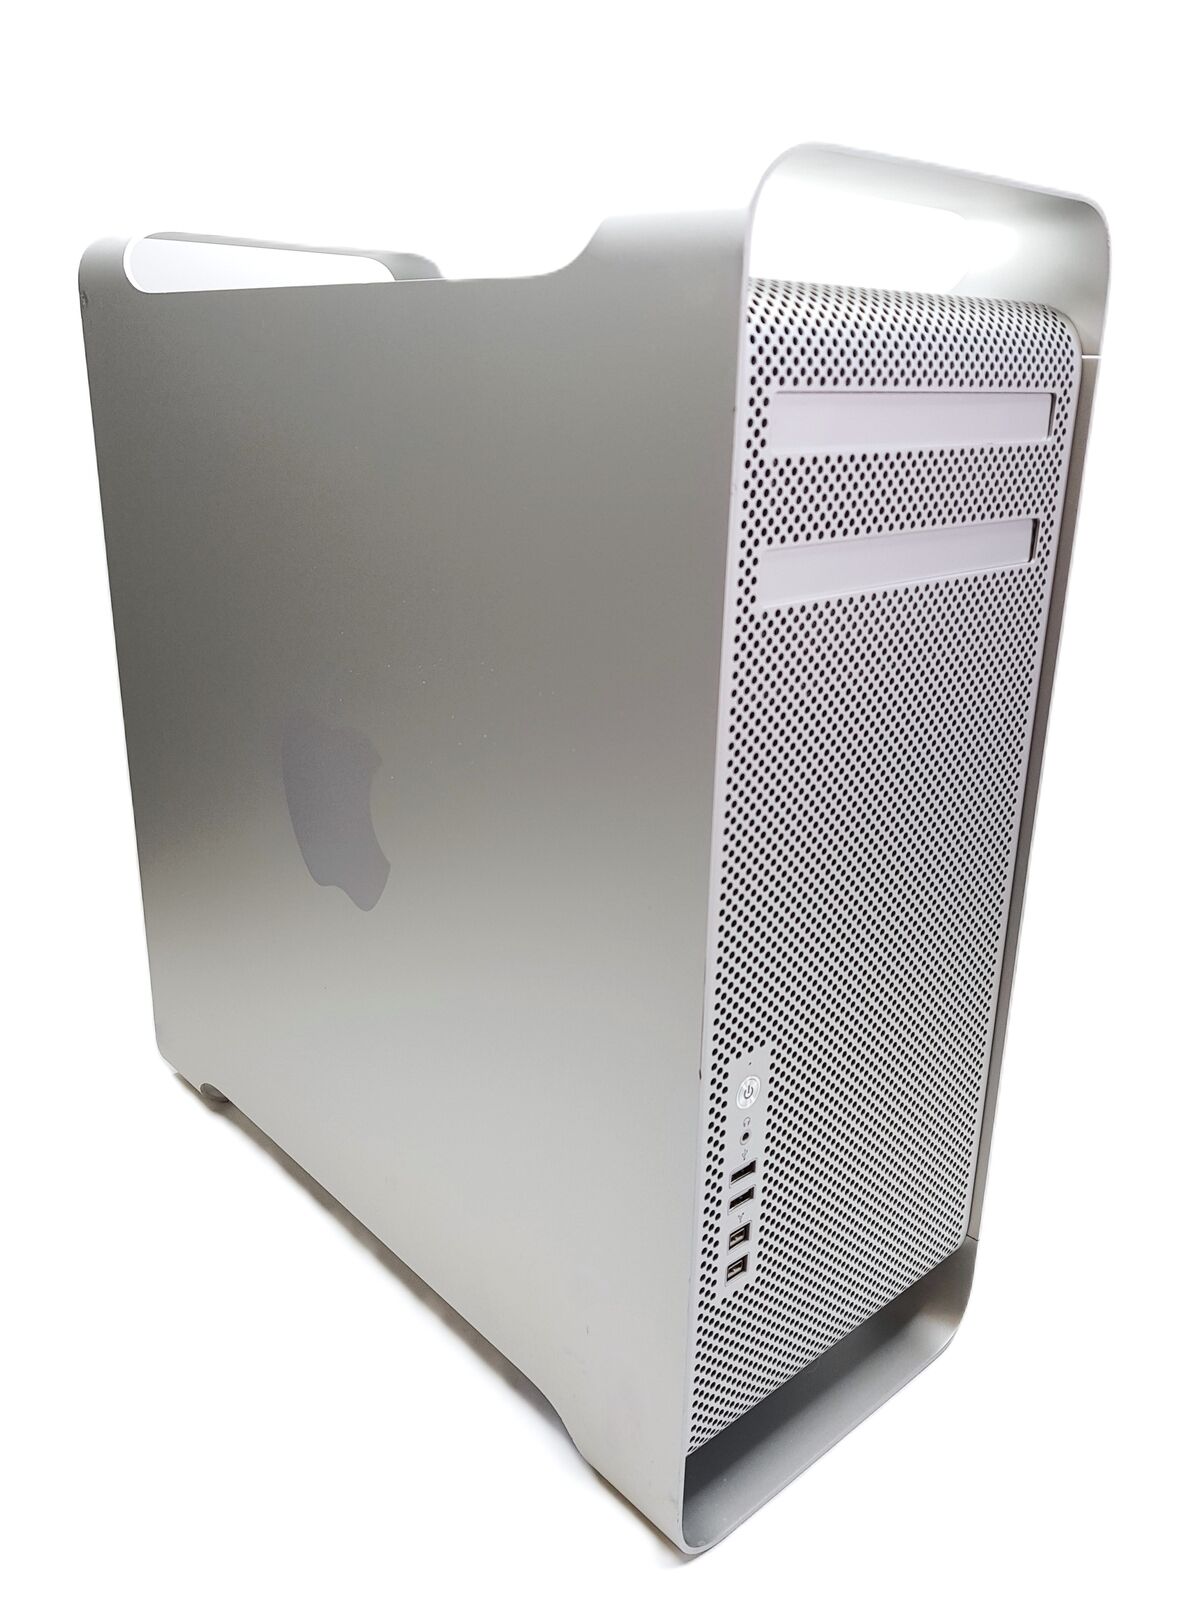 Apple MAC Pro A1289 2009 Quad-Core Xeon 2.93GHz 16GB Ram 640GB HDD GT120x2